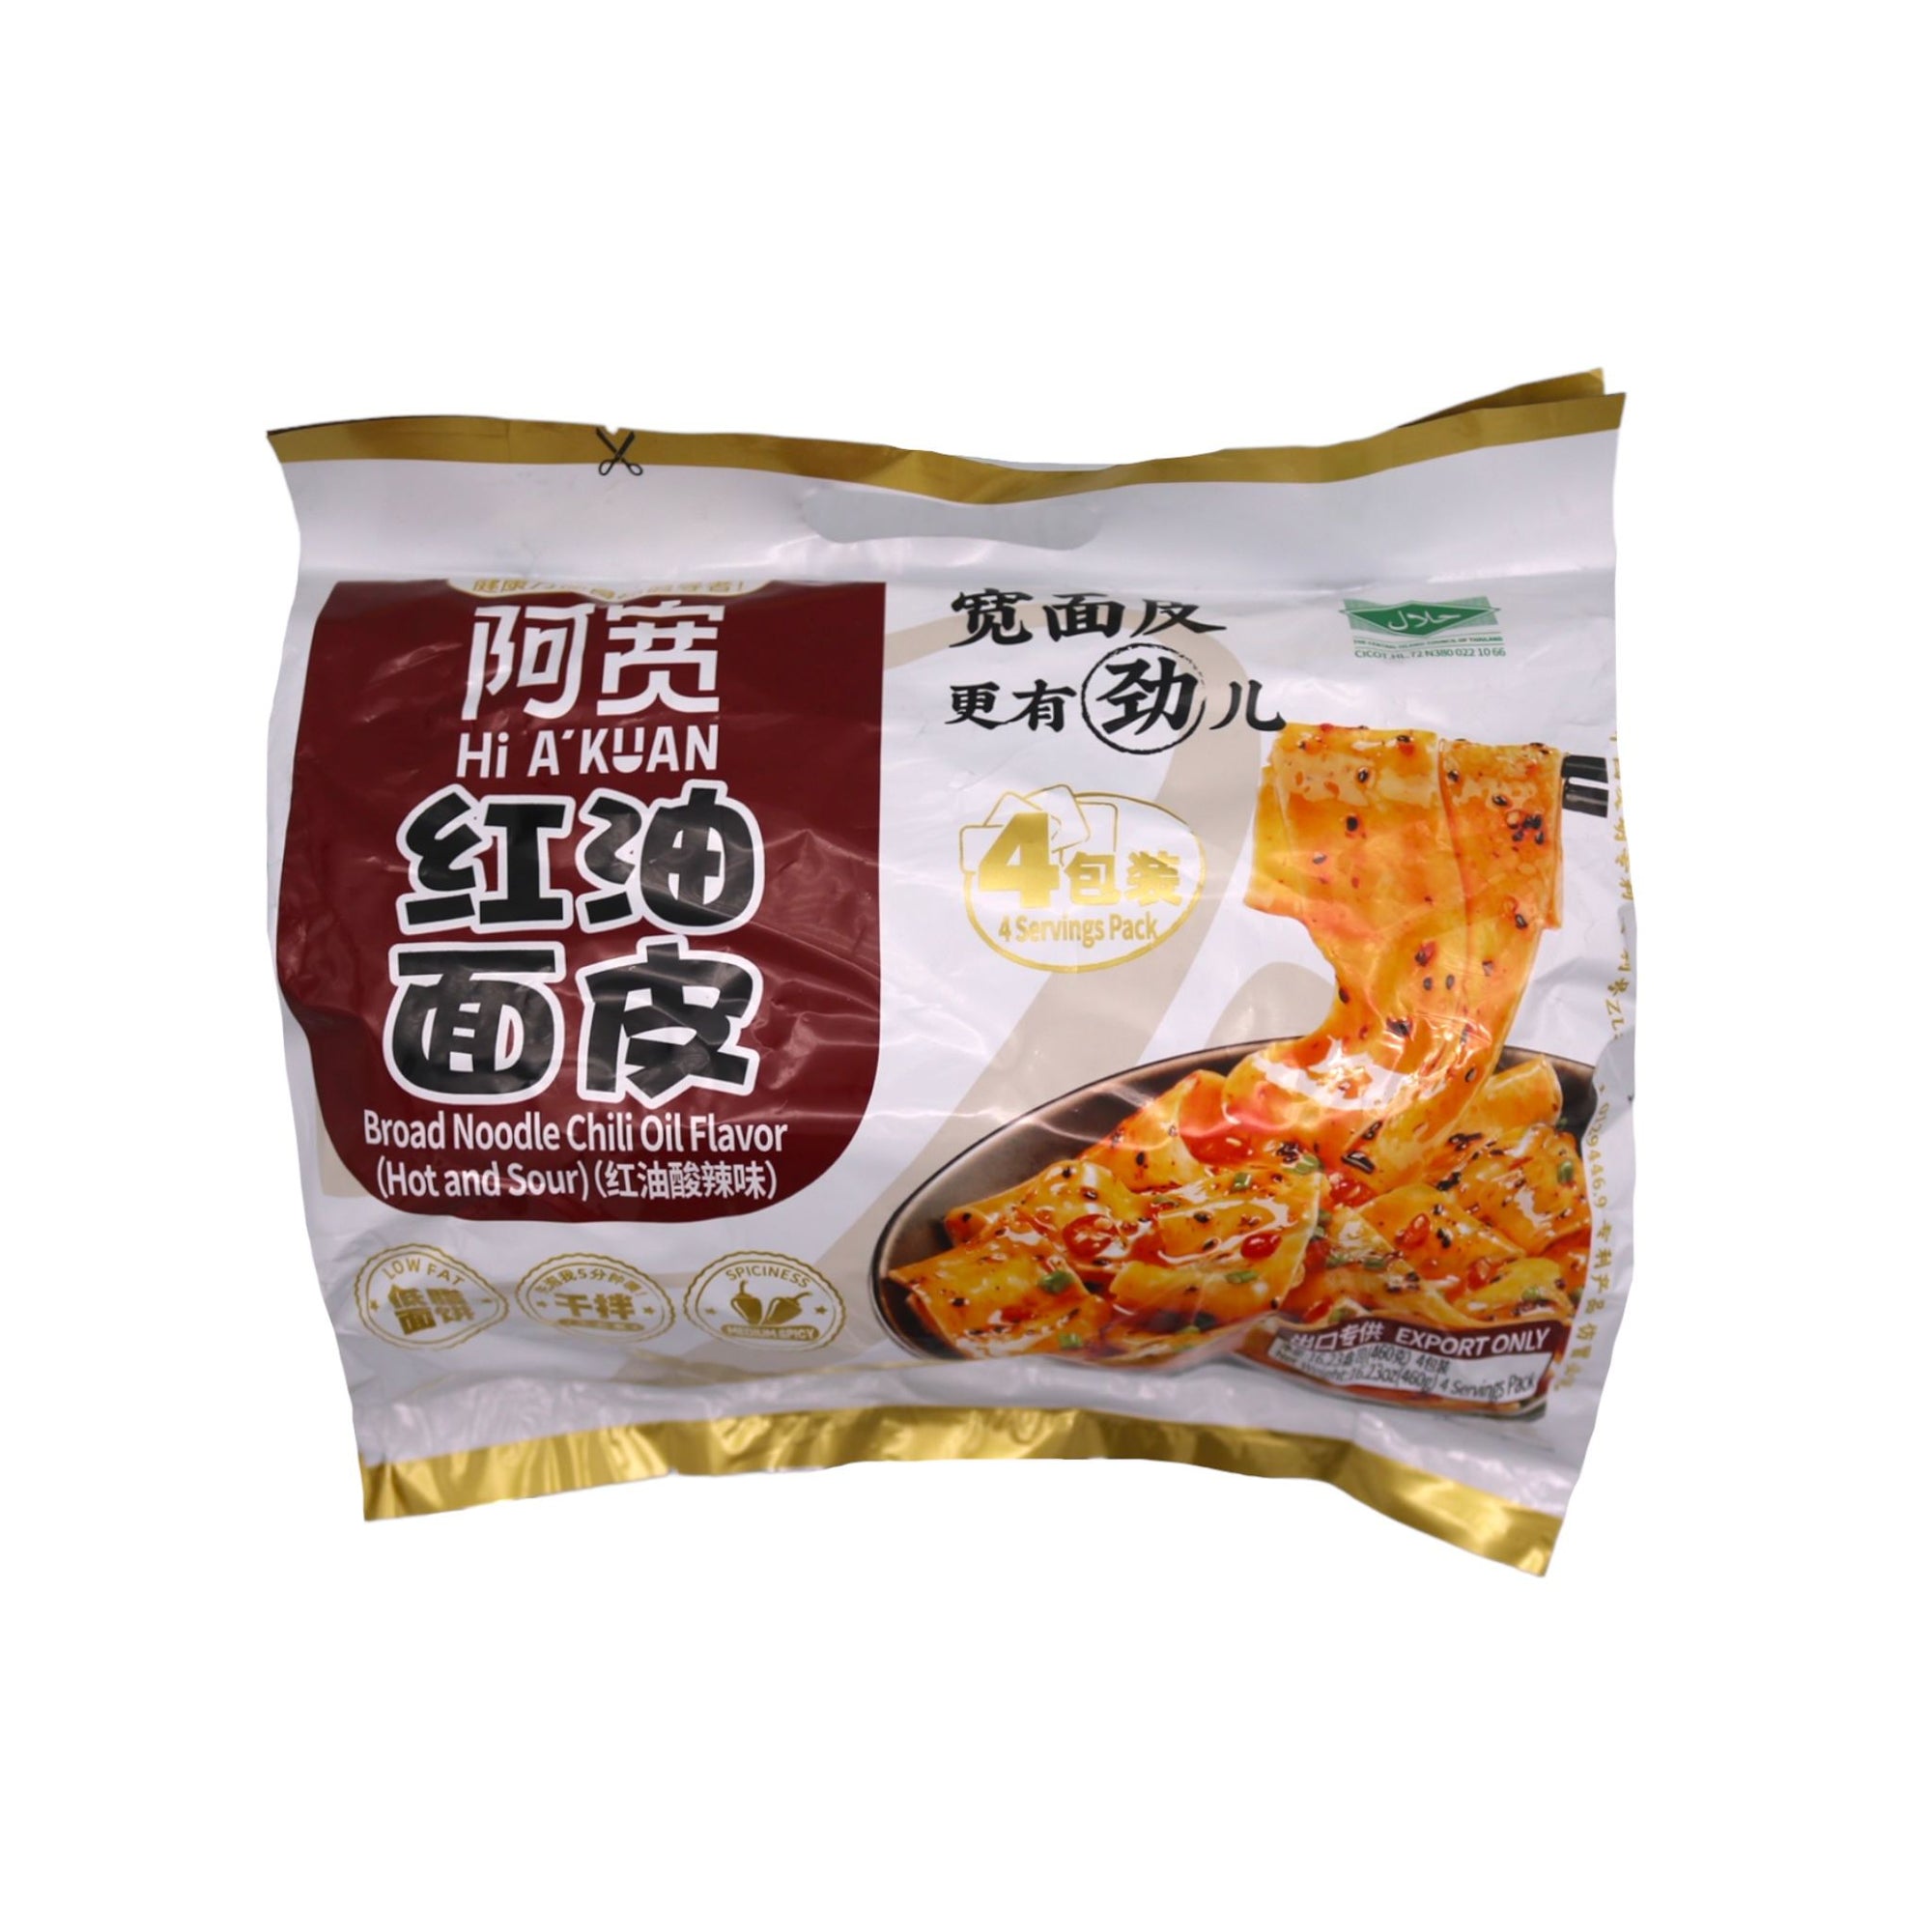 A-Kuan Sichuan Broad Noodle Chilli Oil Flavour Noodle Pack (Hot&Sour) 白家阿宽红油面皮酸辣味 (115g*4packs) 460g